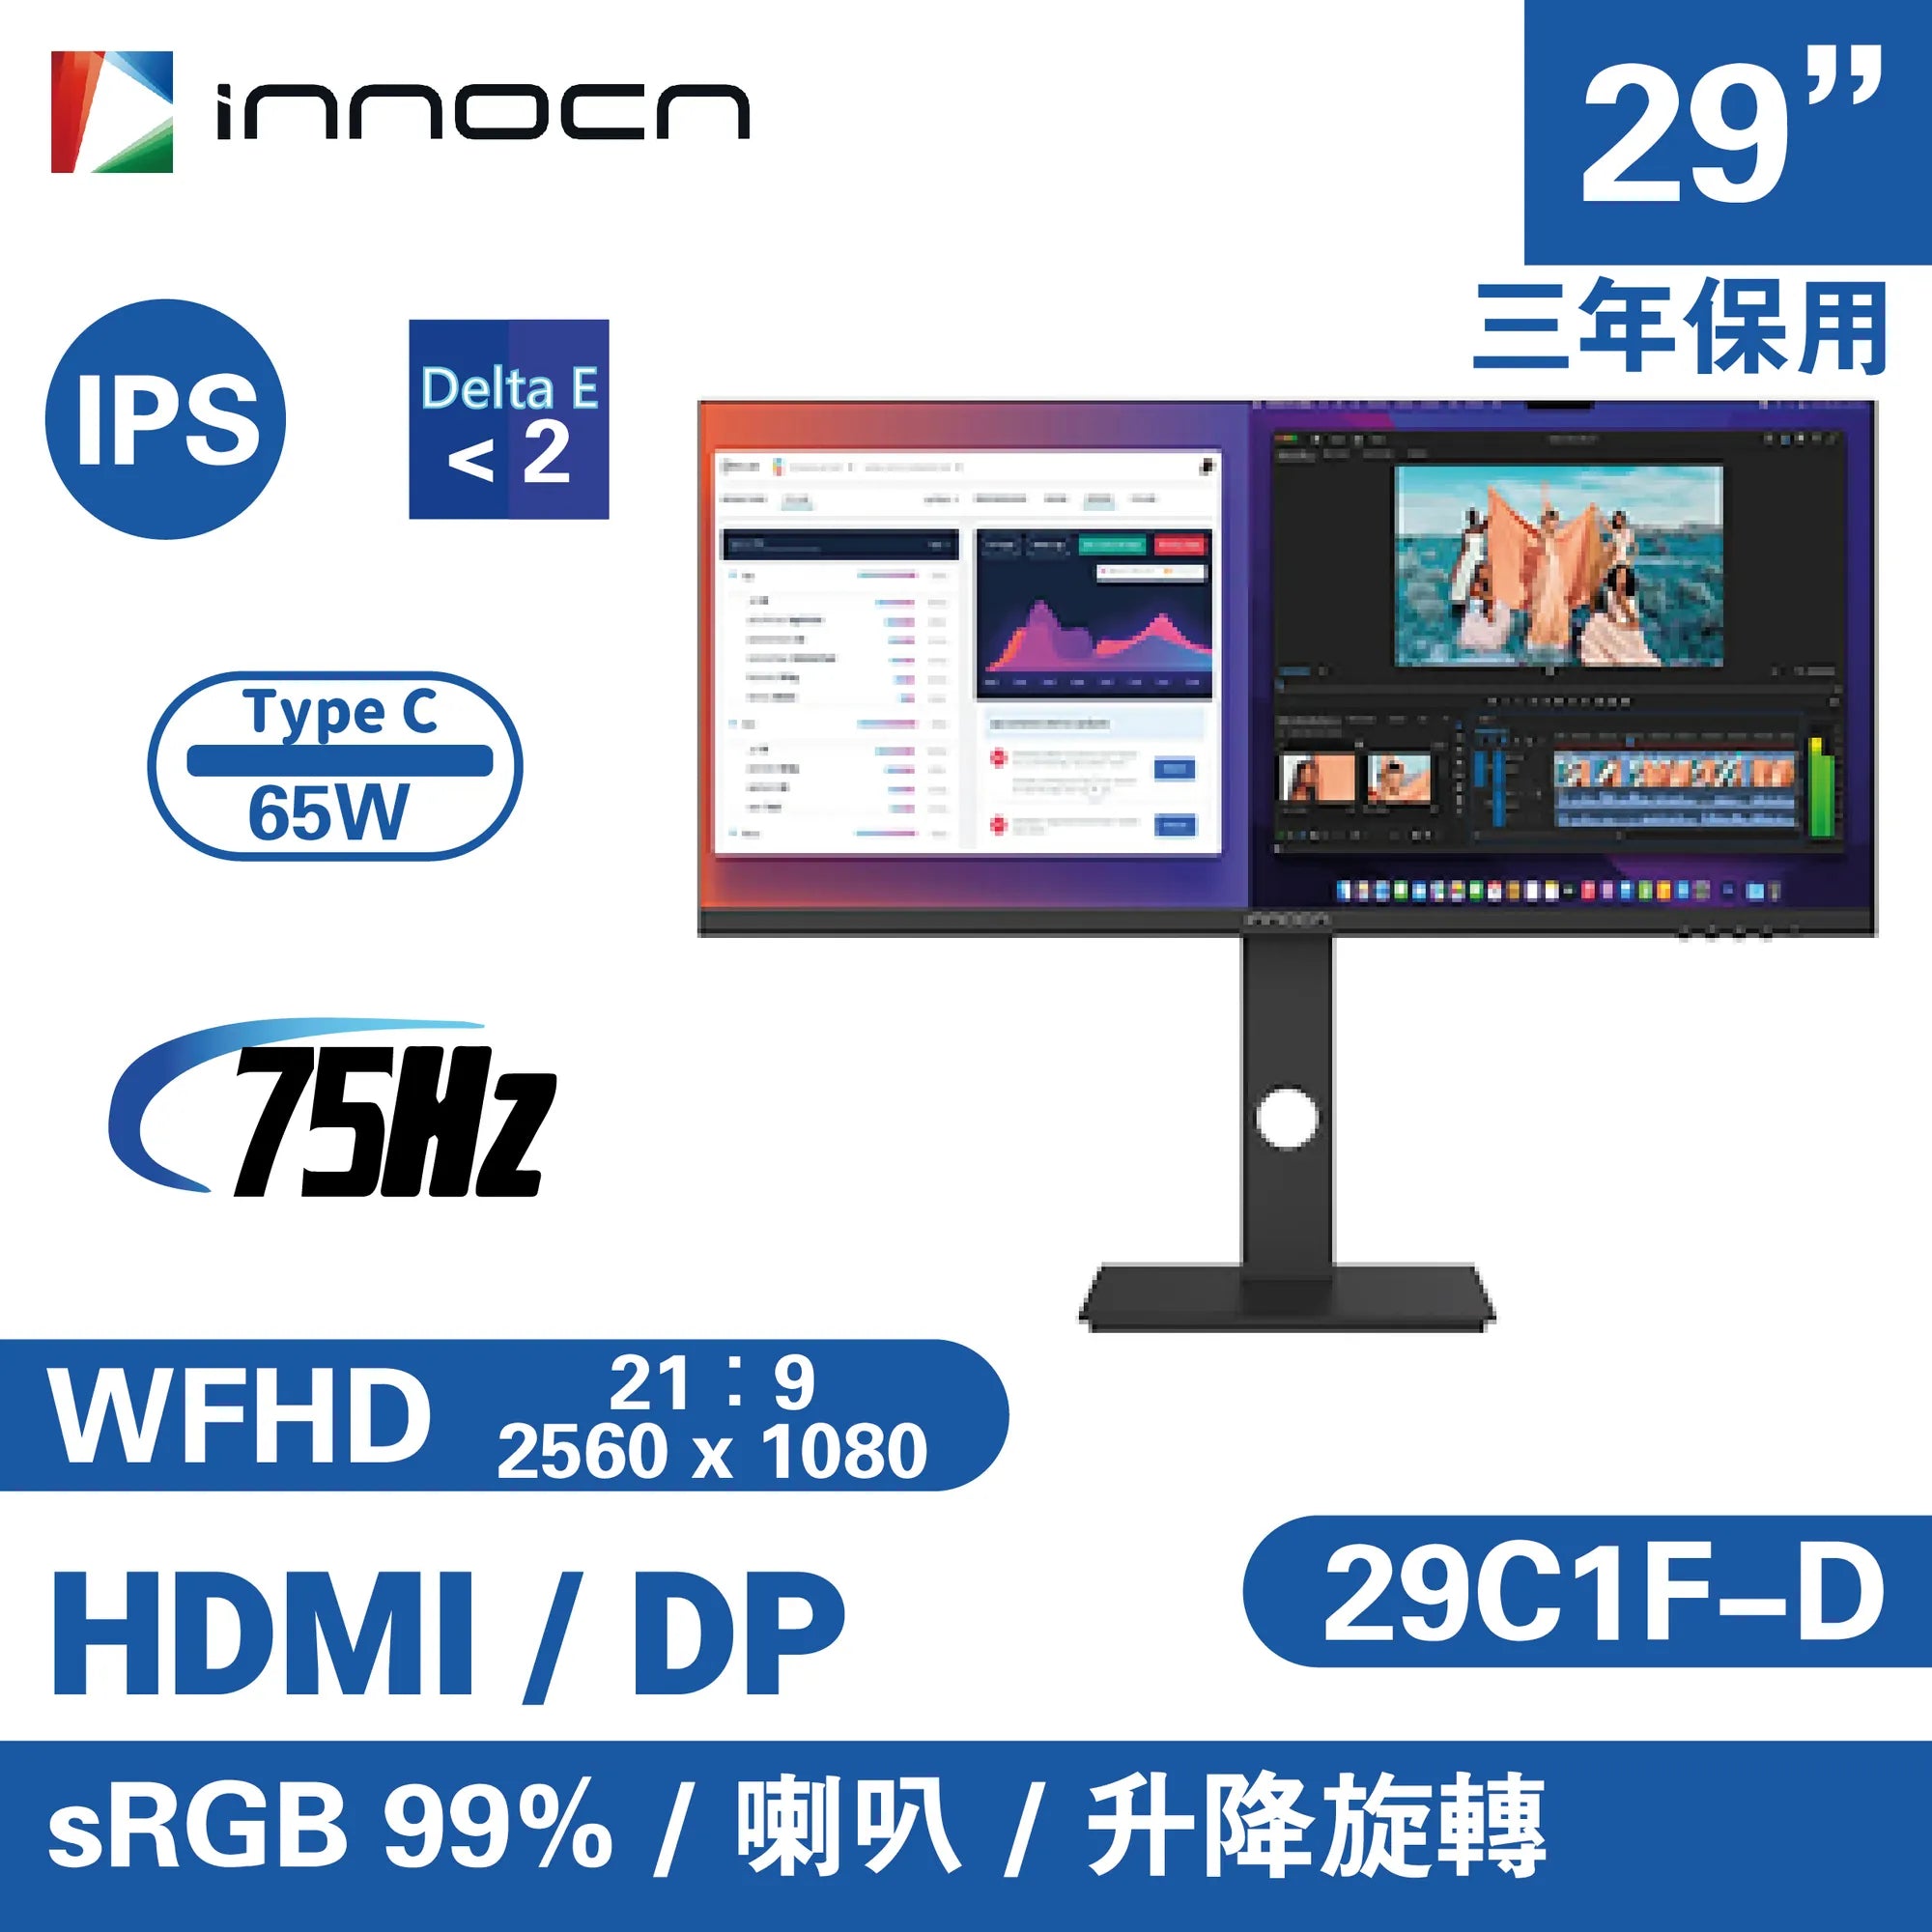 INNOCN 29C1F-D 專業顯示器 (29吋 / UWFHD / 75Hz / IPS / HDR) - 2560 x 1080 電腦螢幕 顯示設備 INNOCN 27-30" UWFHD 60-75Hz 平面 Flat IPS HDR 21:9  3年上門保養